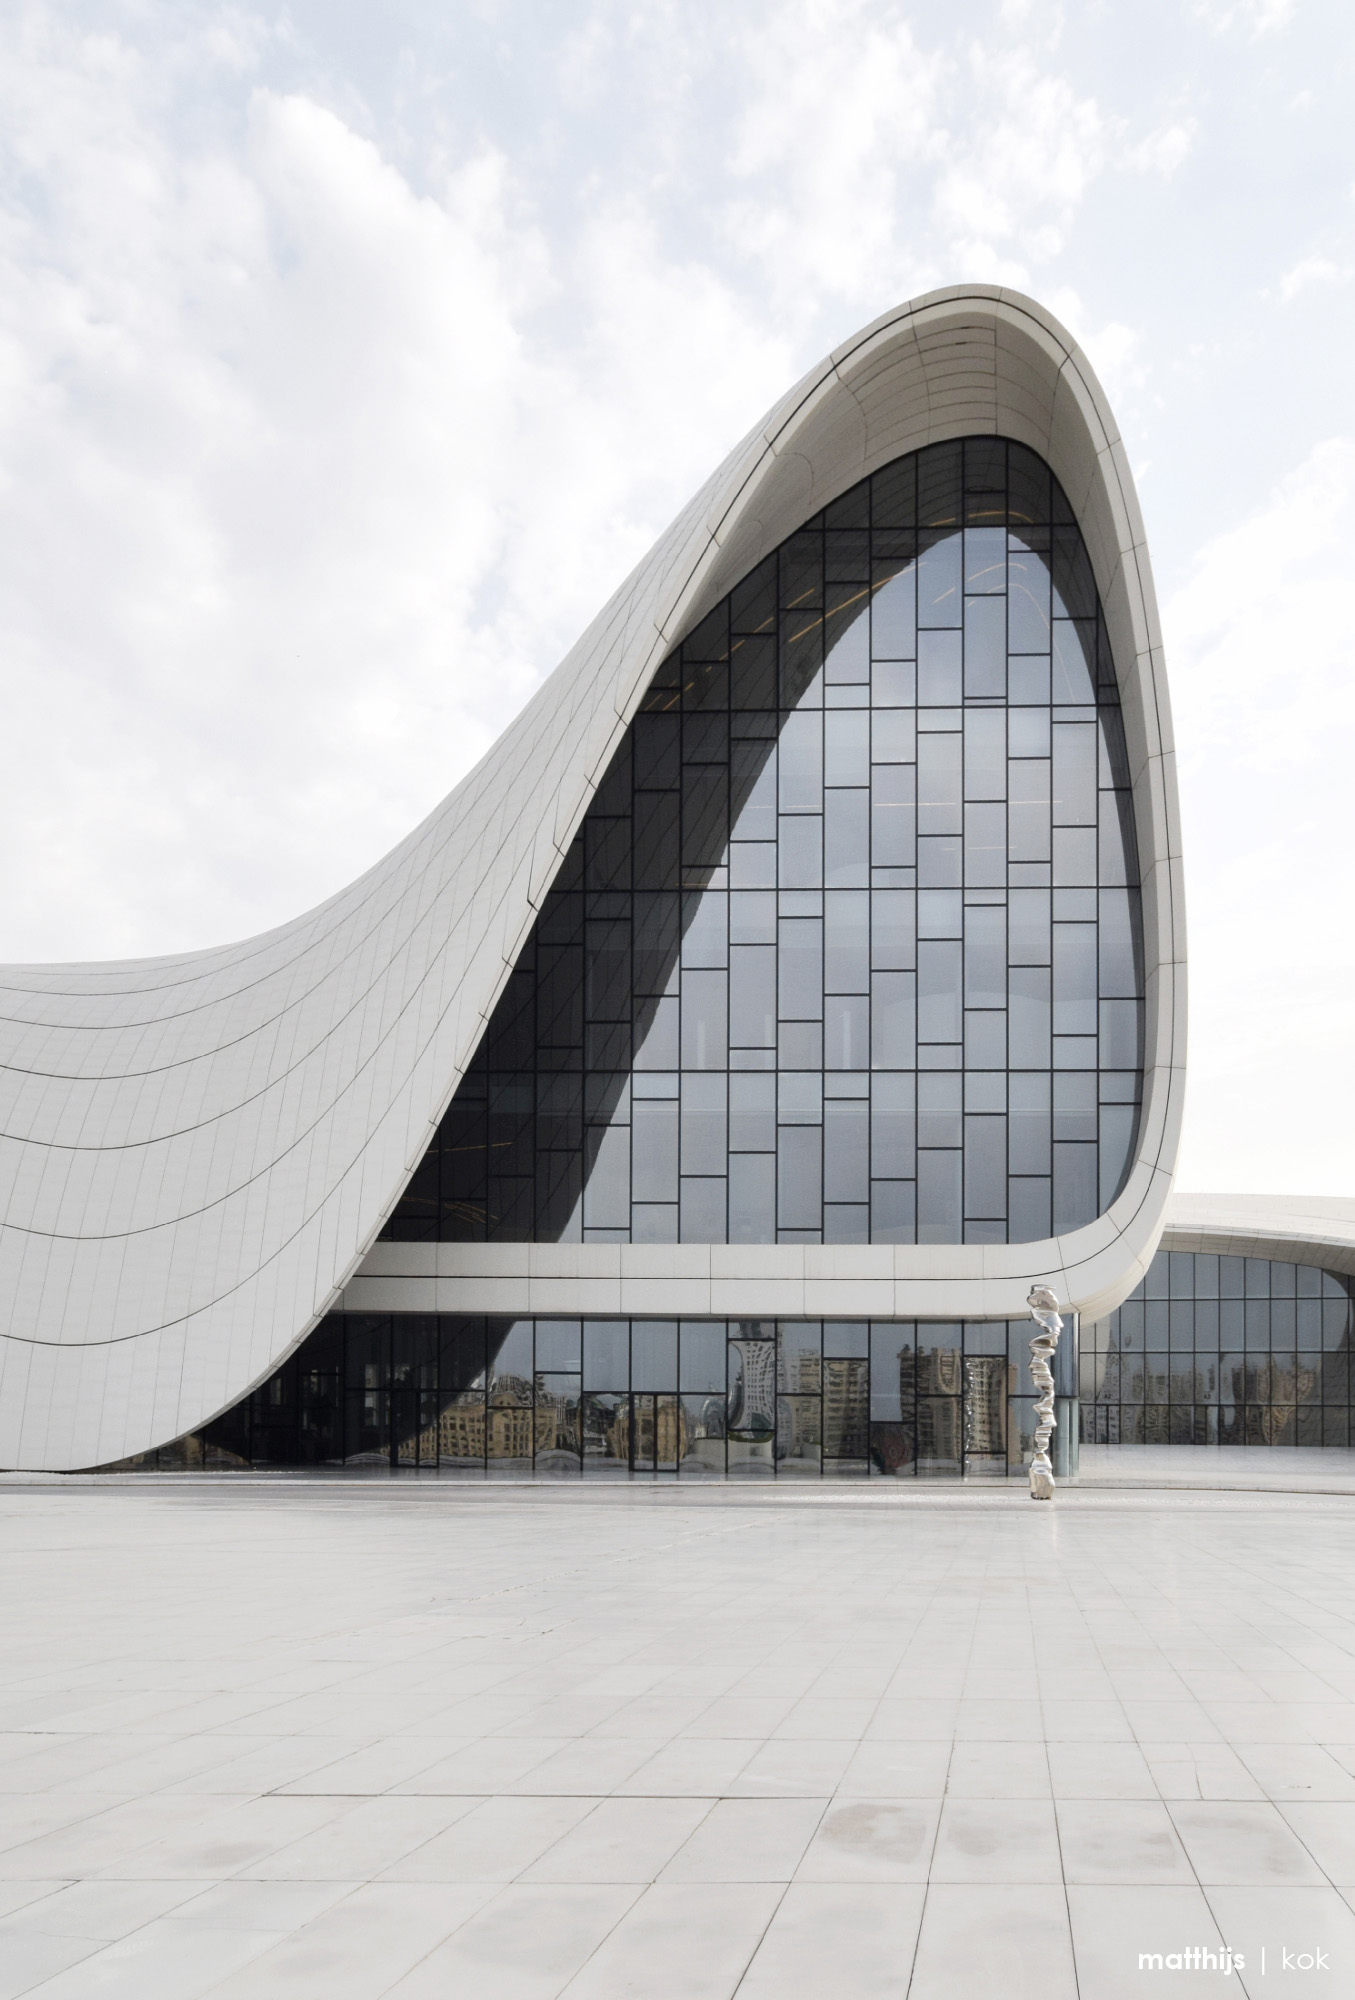  Heydar Aliyev Center by Zaha Hadid, Baku, Azerbaijan | Photo by Matthijs Kok